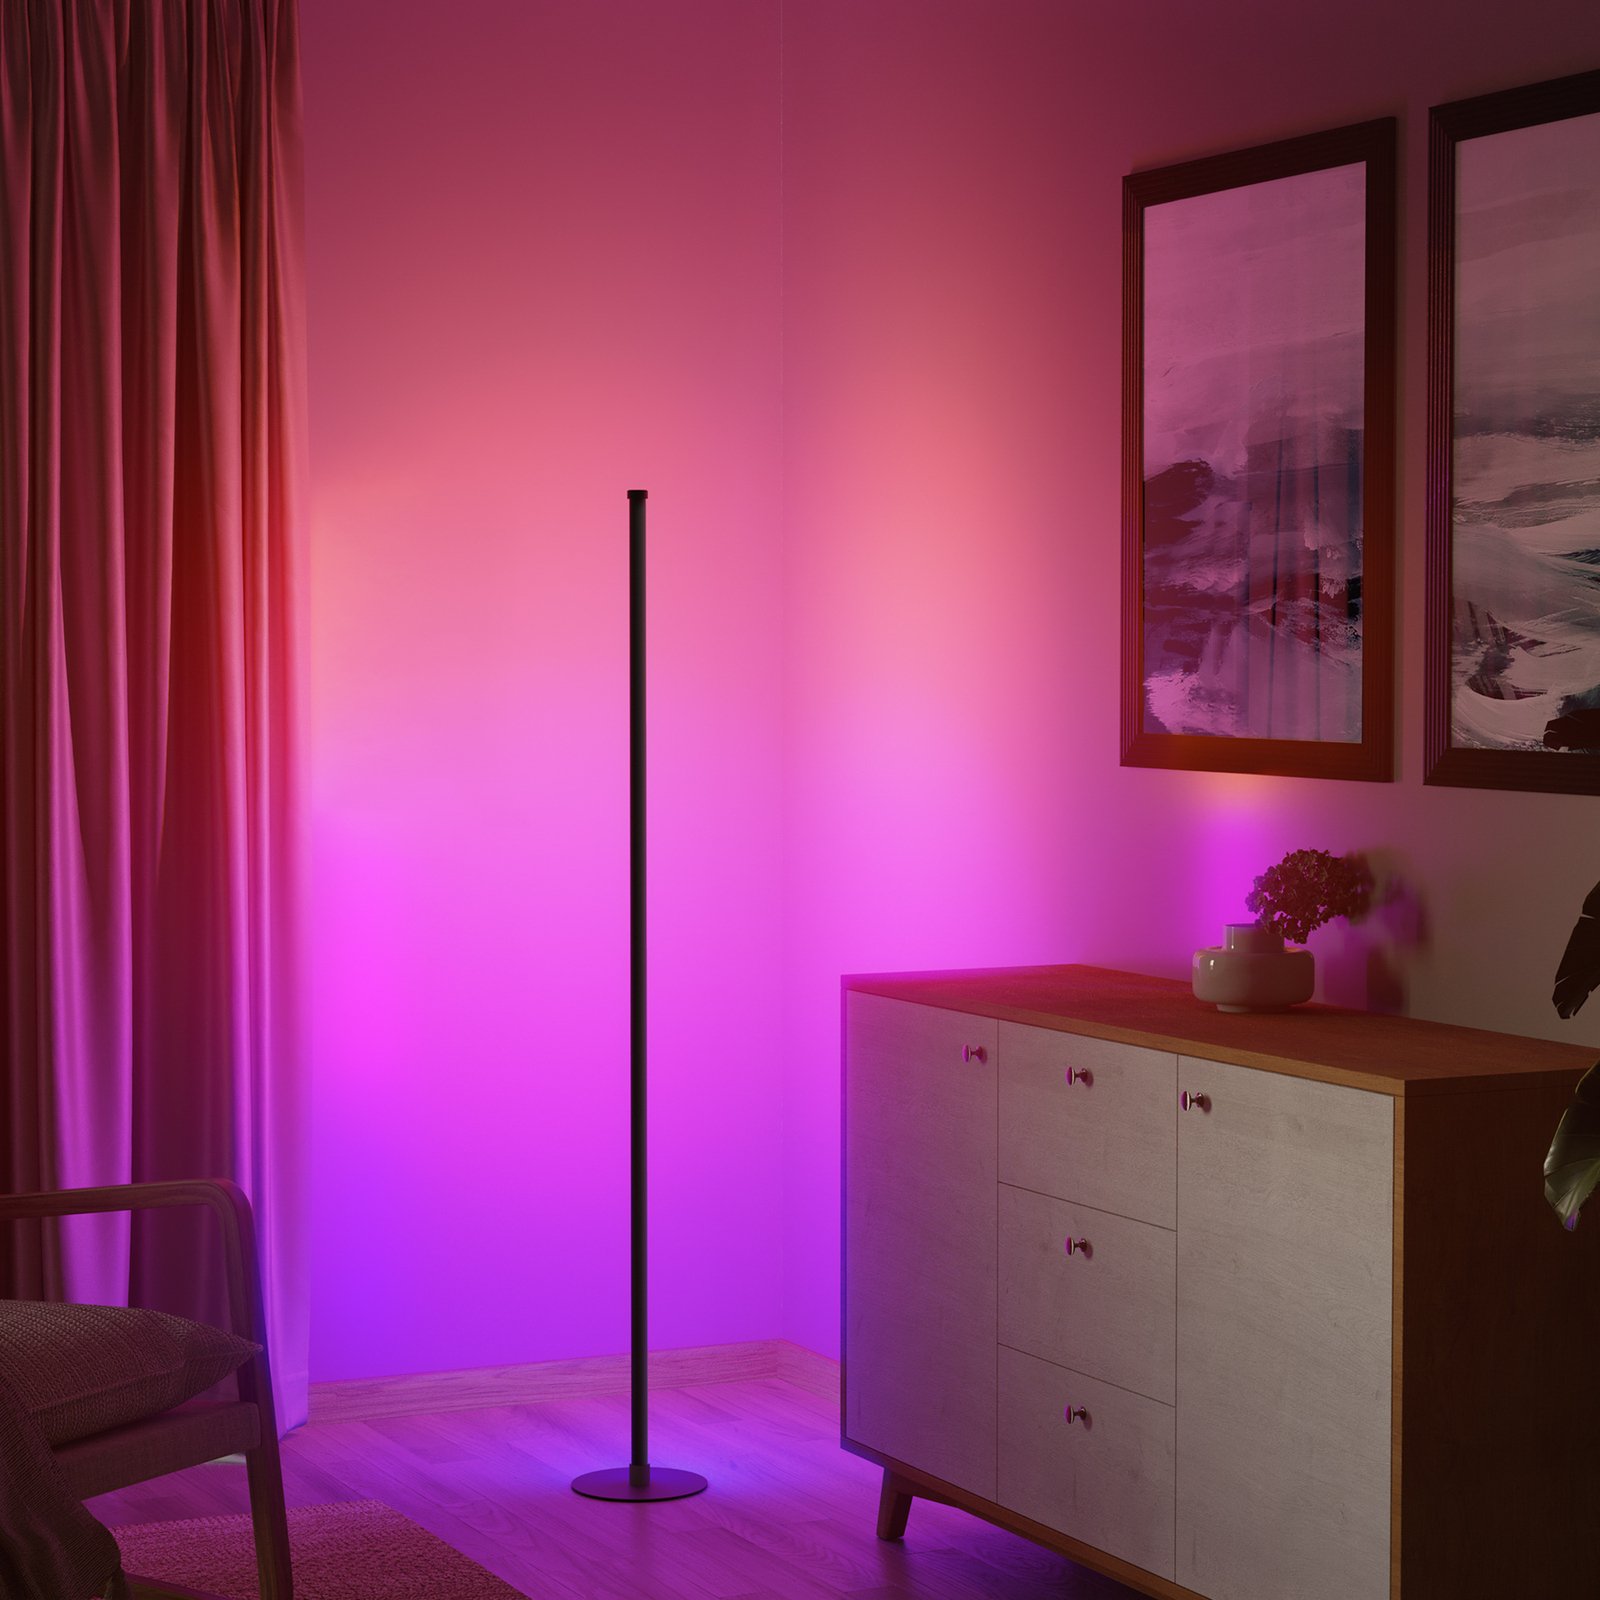 LED vloerlamp met muzieksensor Smart RGB dimbaar